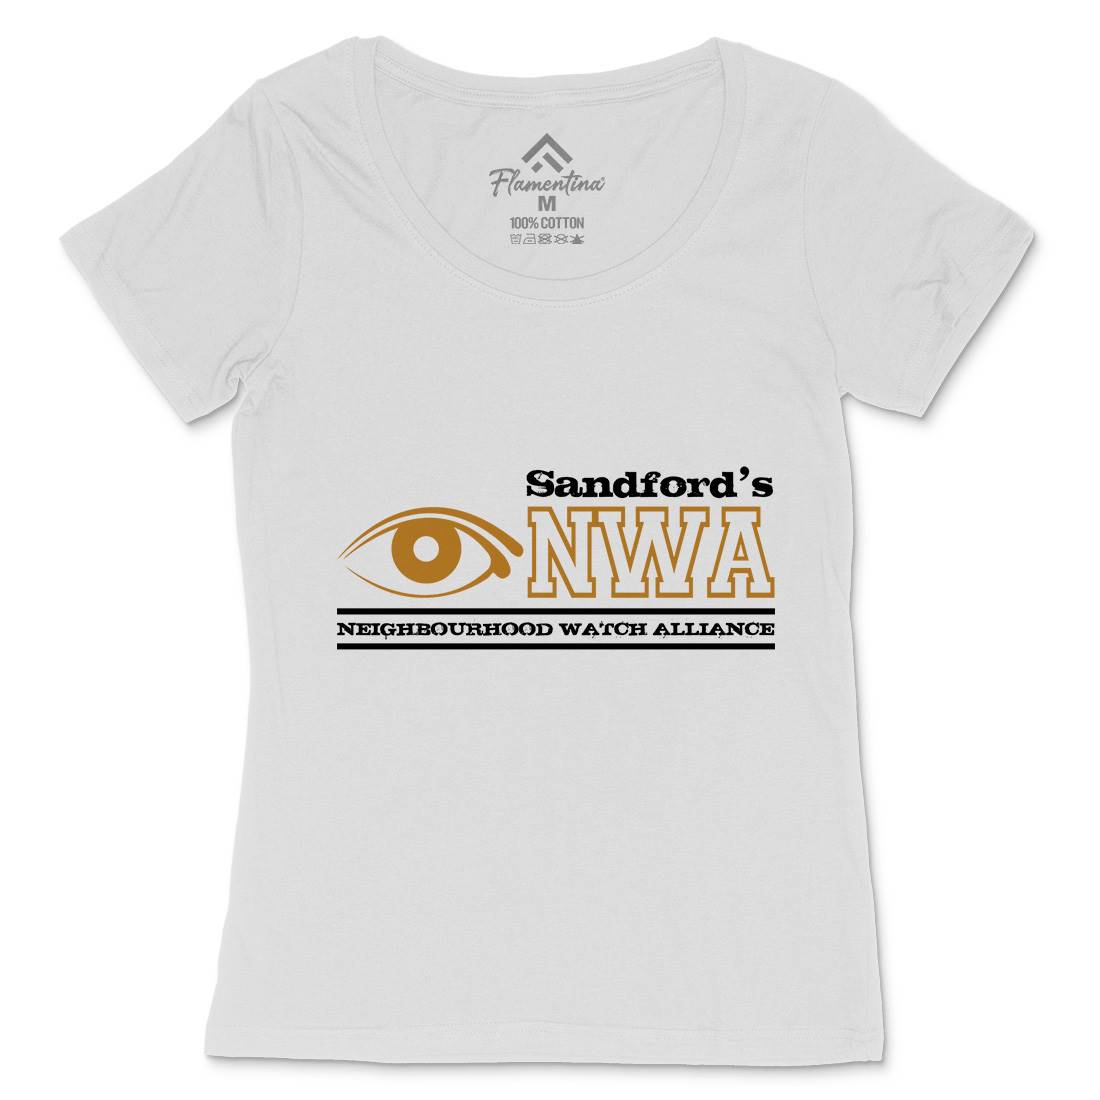 Nwa Womens Scoop Neck T-Shirt Retro D426